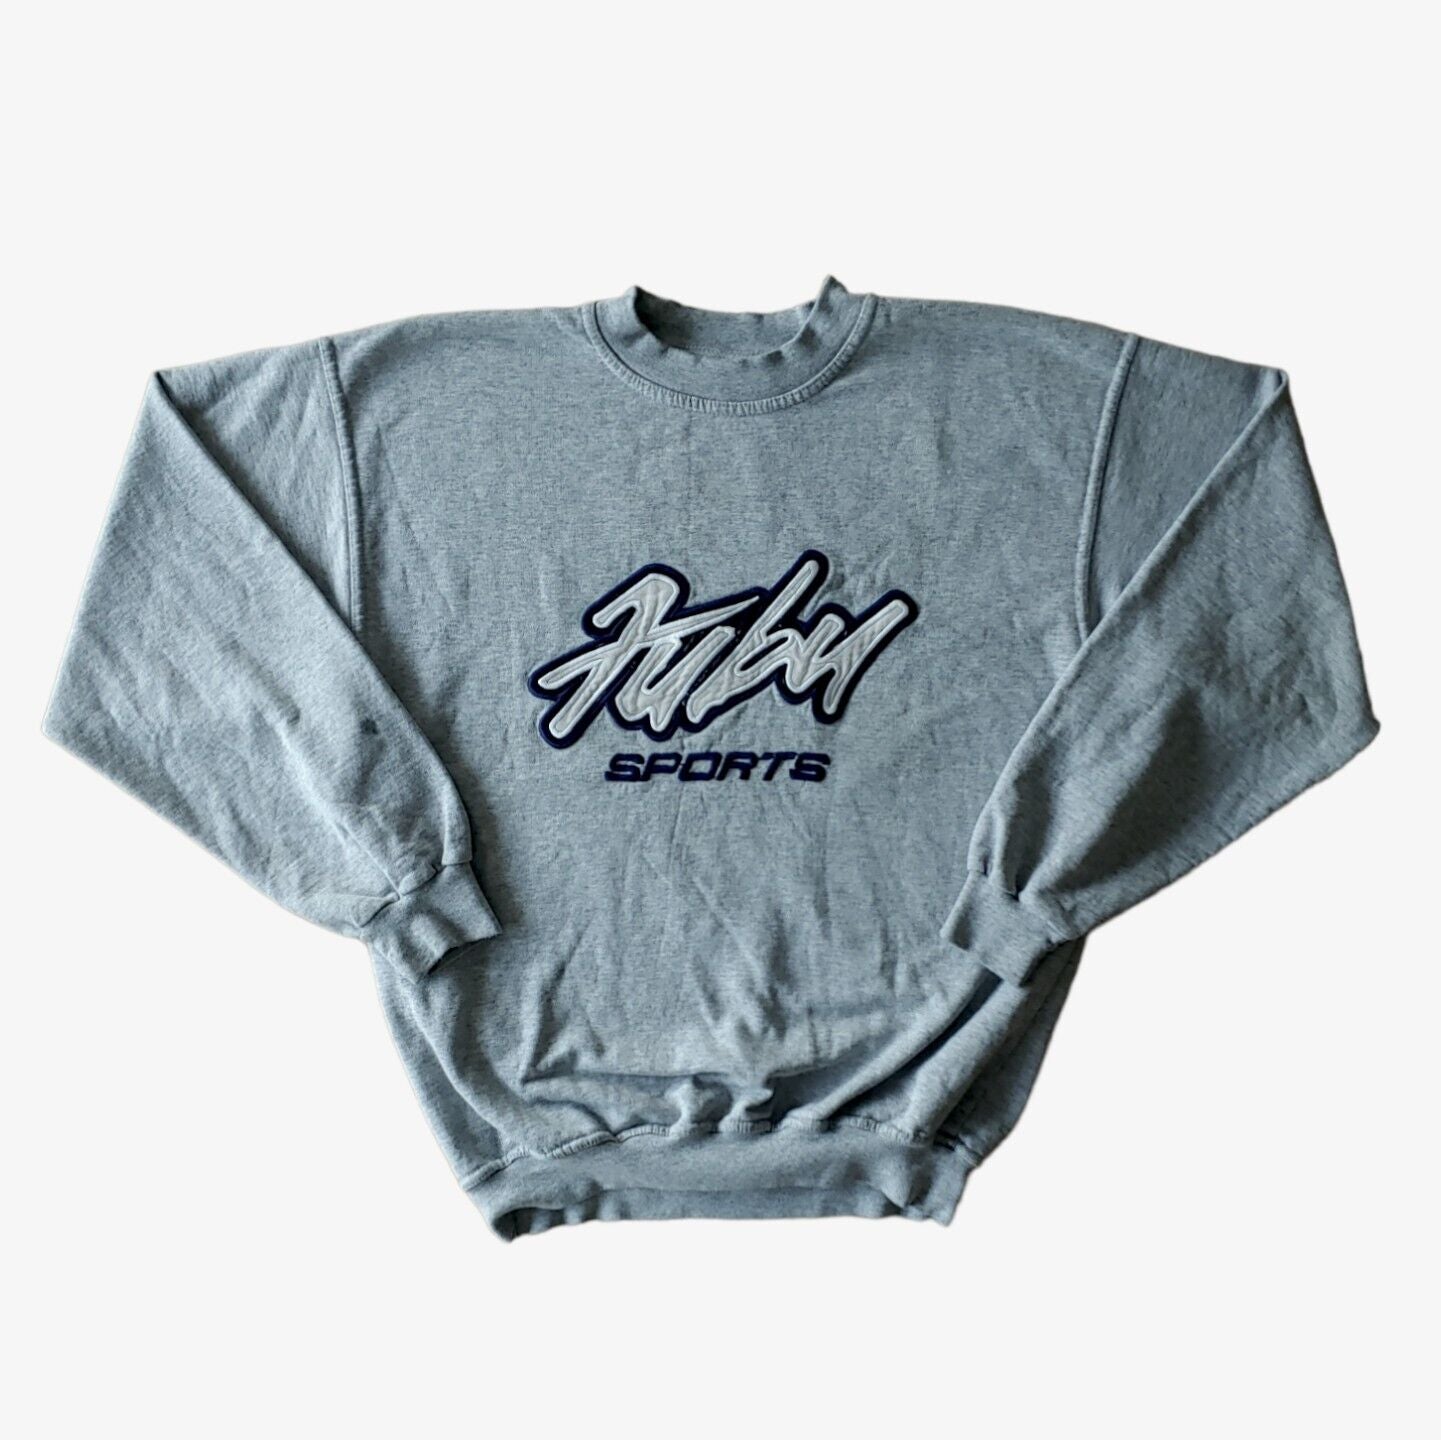 Vintage 90s Fubu Sports Spell Out Logo Grey Rap Hip Hop Rave Streetwear Sweatshirt - Casspios Dream